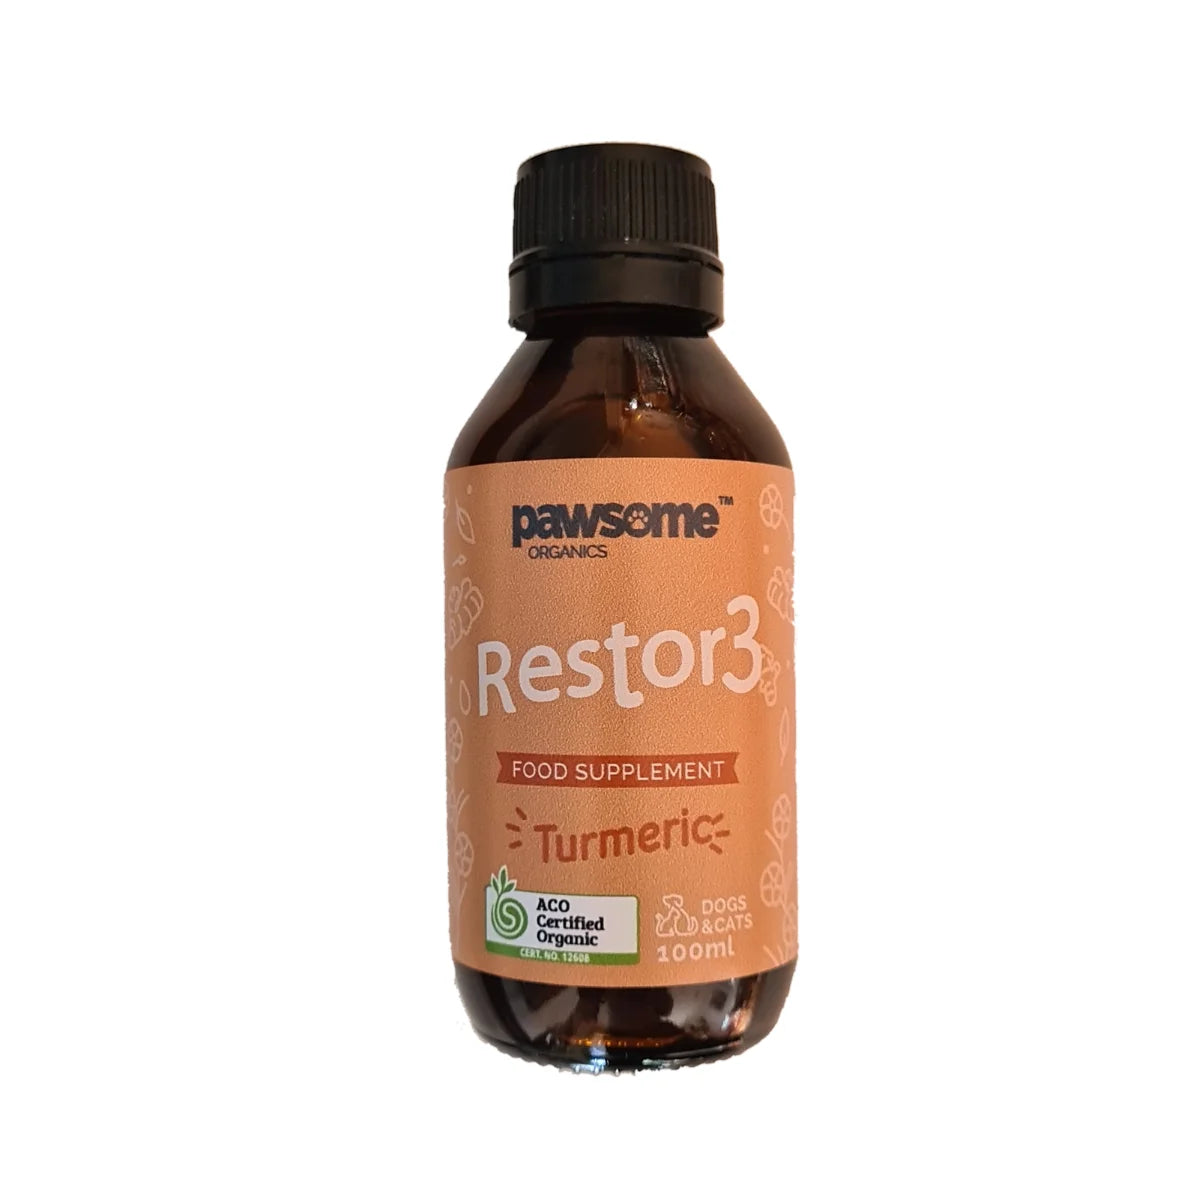 Pawsome Organics - Restor3 Flaxseed Oil with Turmeric 100ml